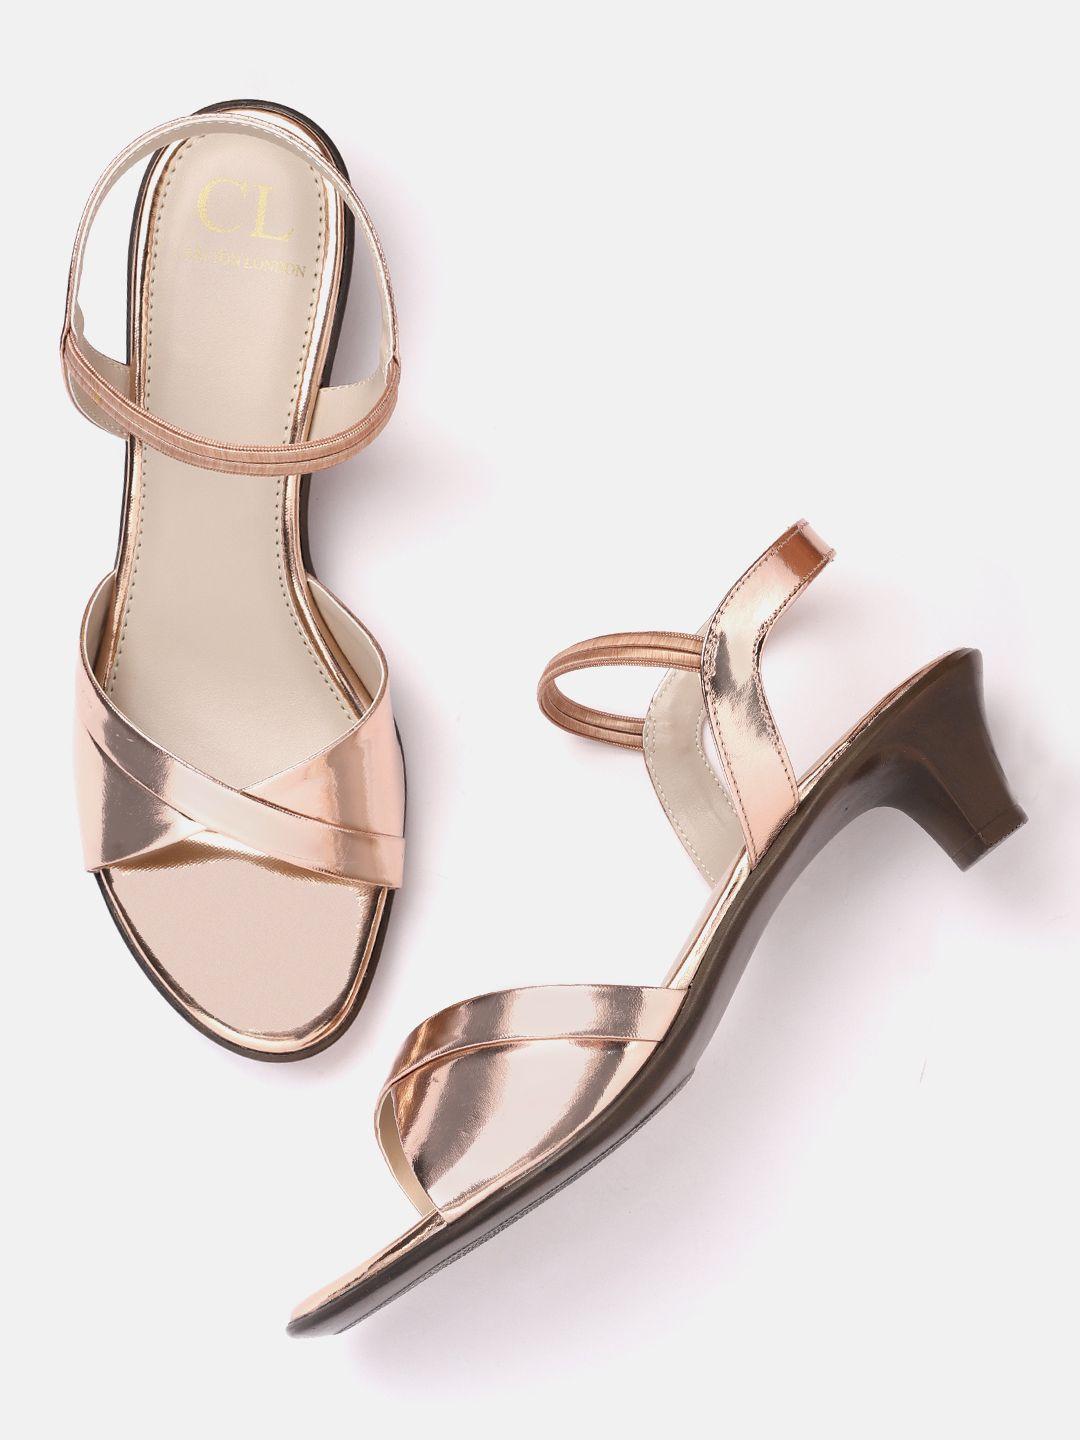 carlton-london-women-rose-gold-toned-patent-finish-block-heels